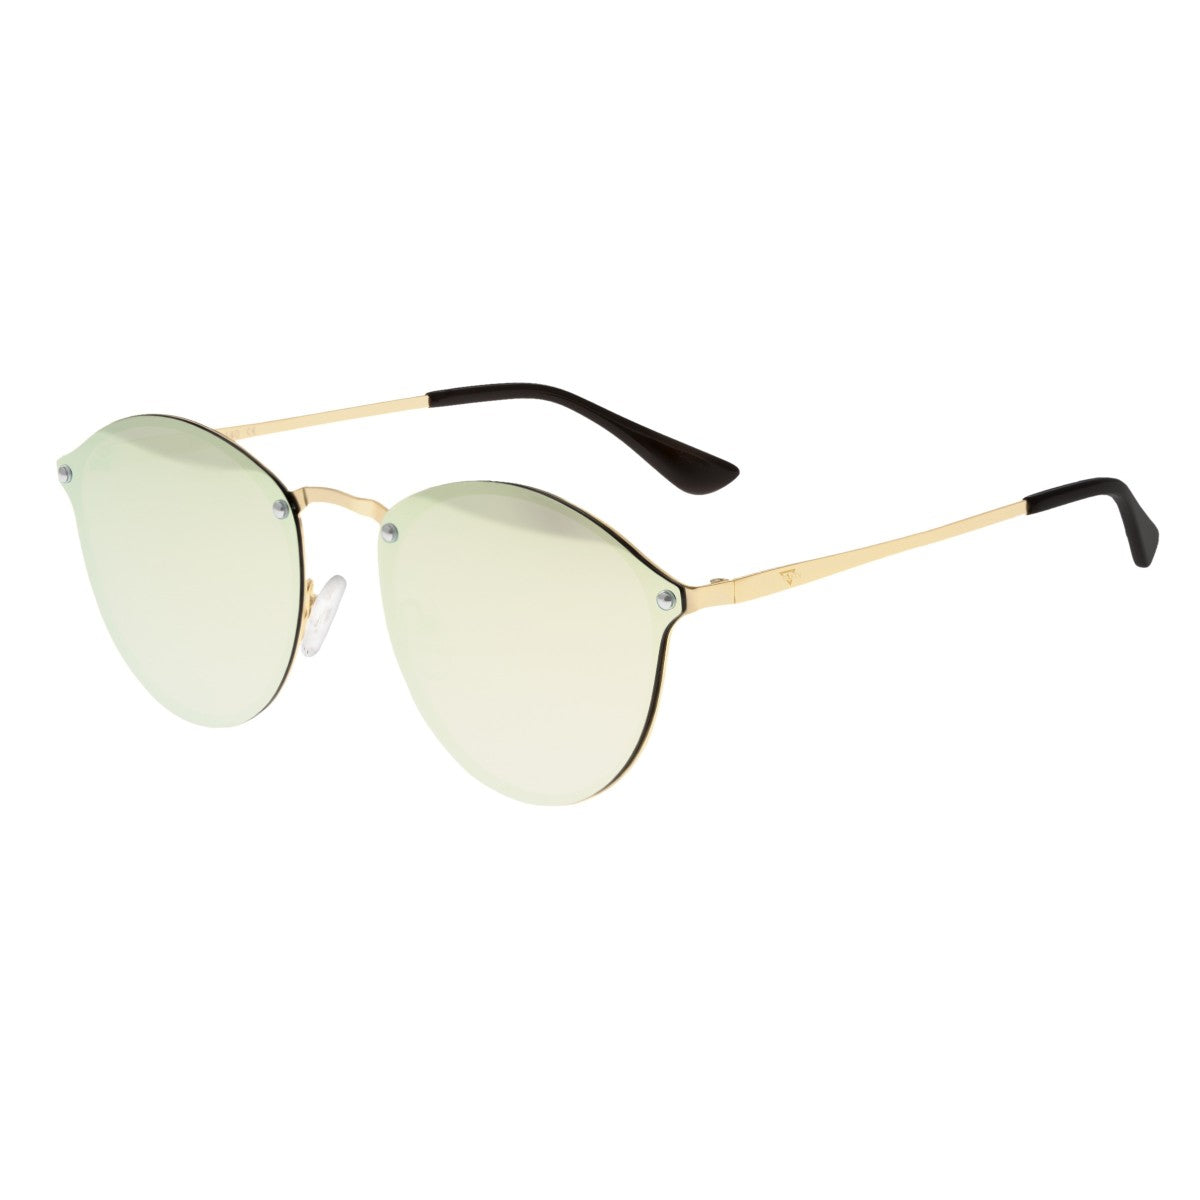 Sixty One Picchu Polarized Sunglasses - Gold/Gold - SIXS143GG